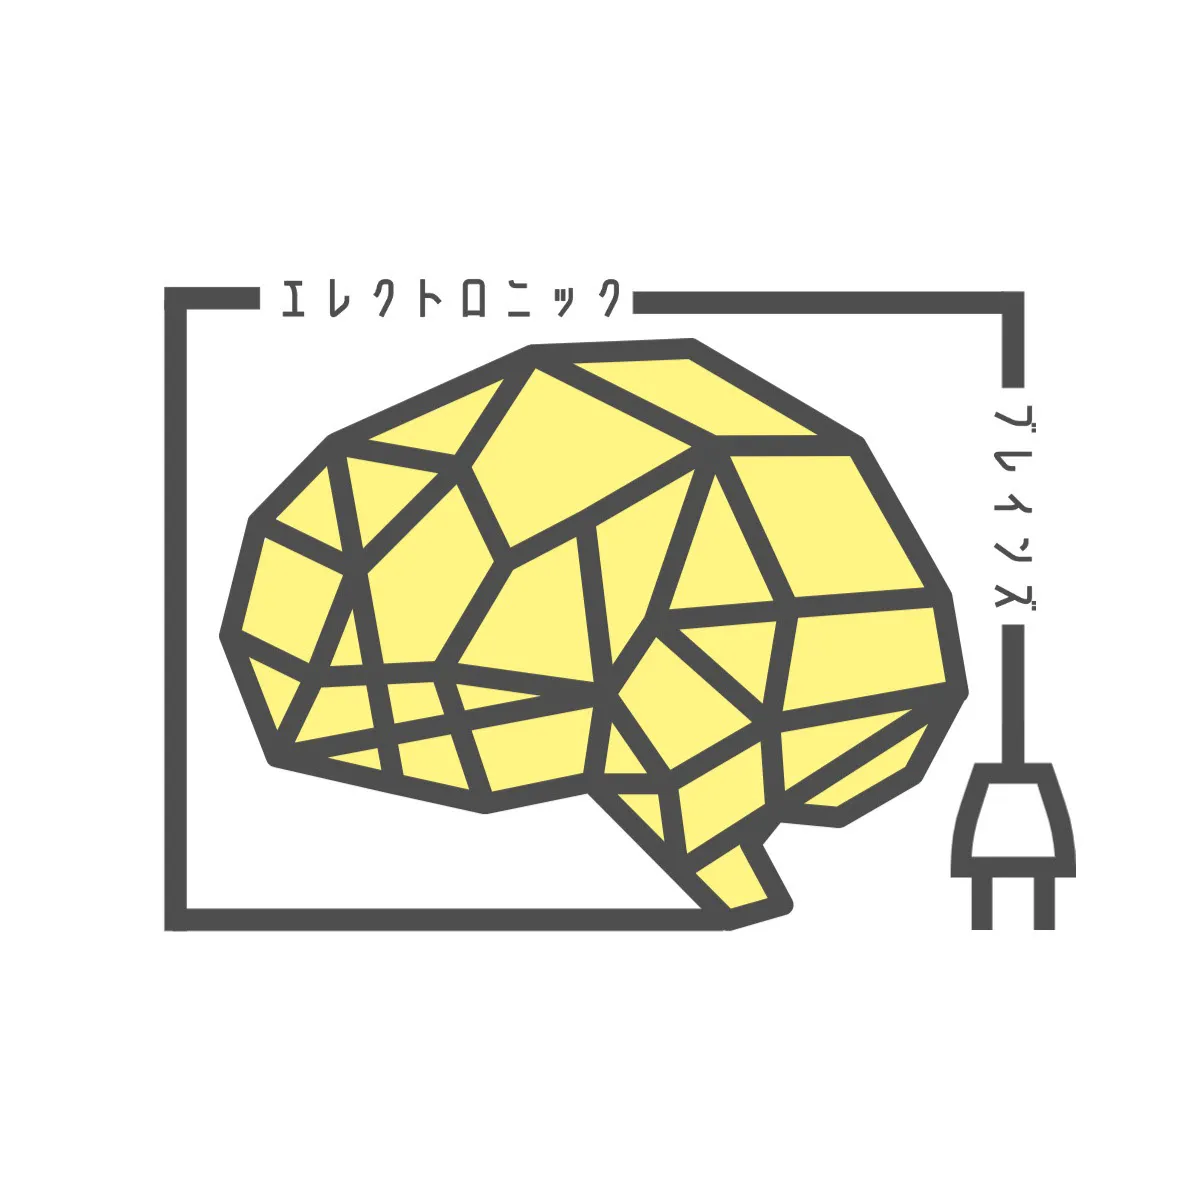 Polygon brain band logo